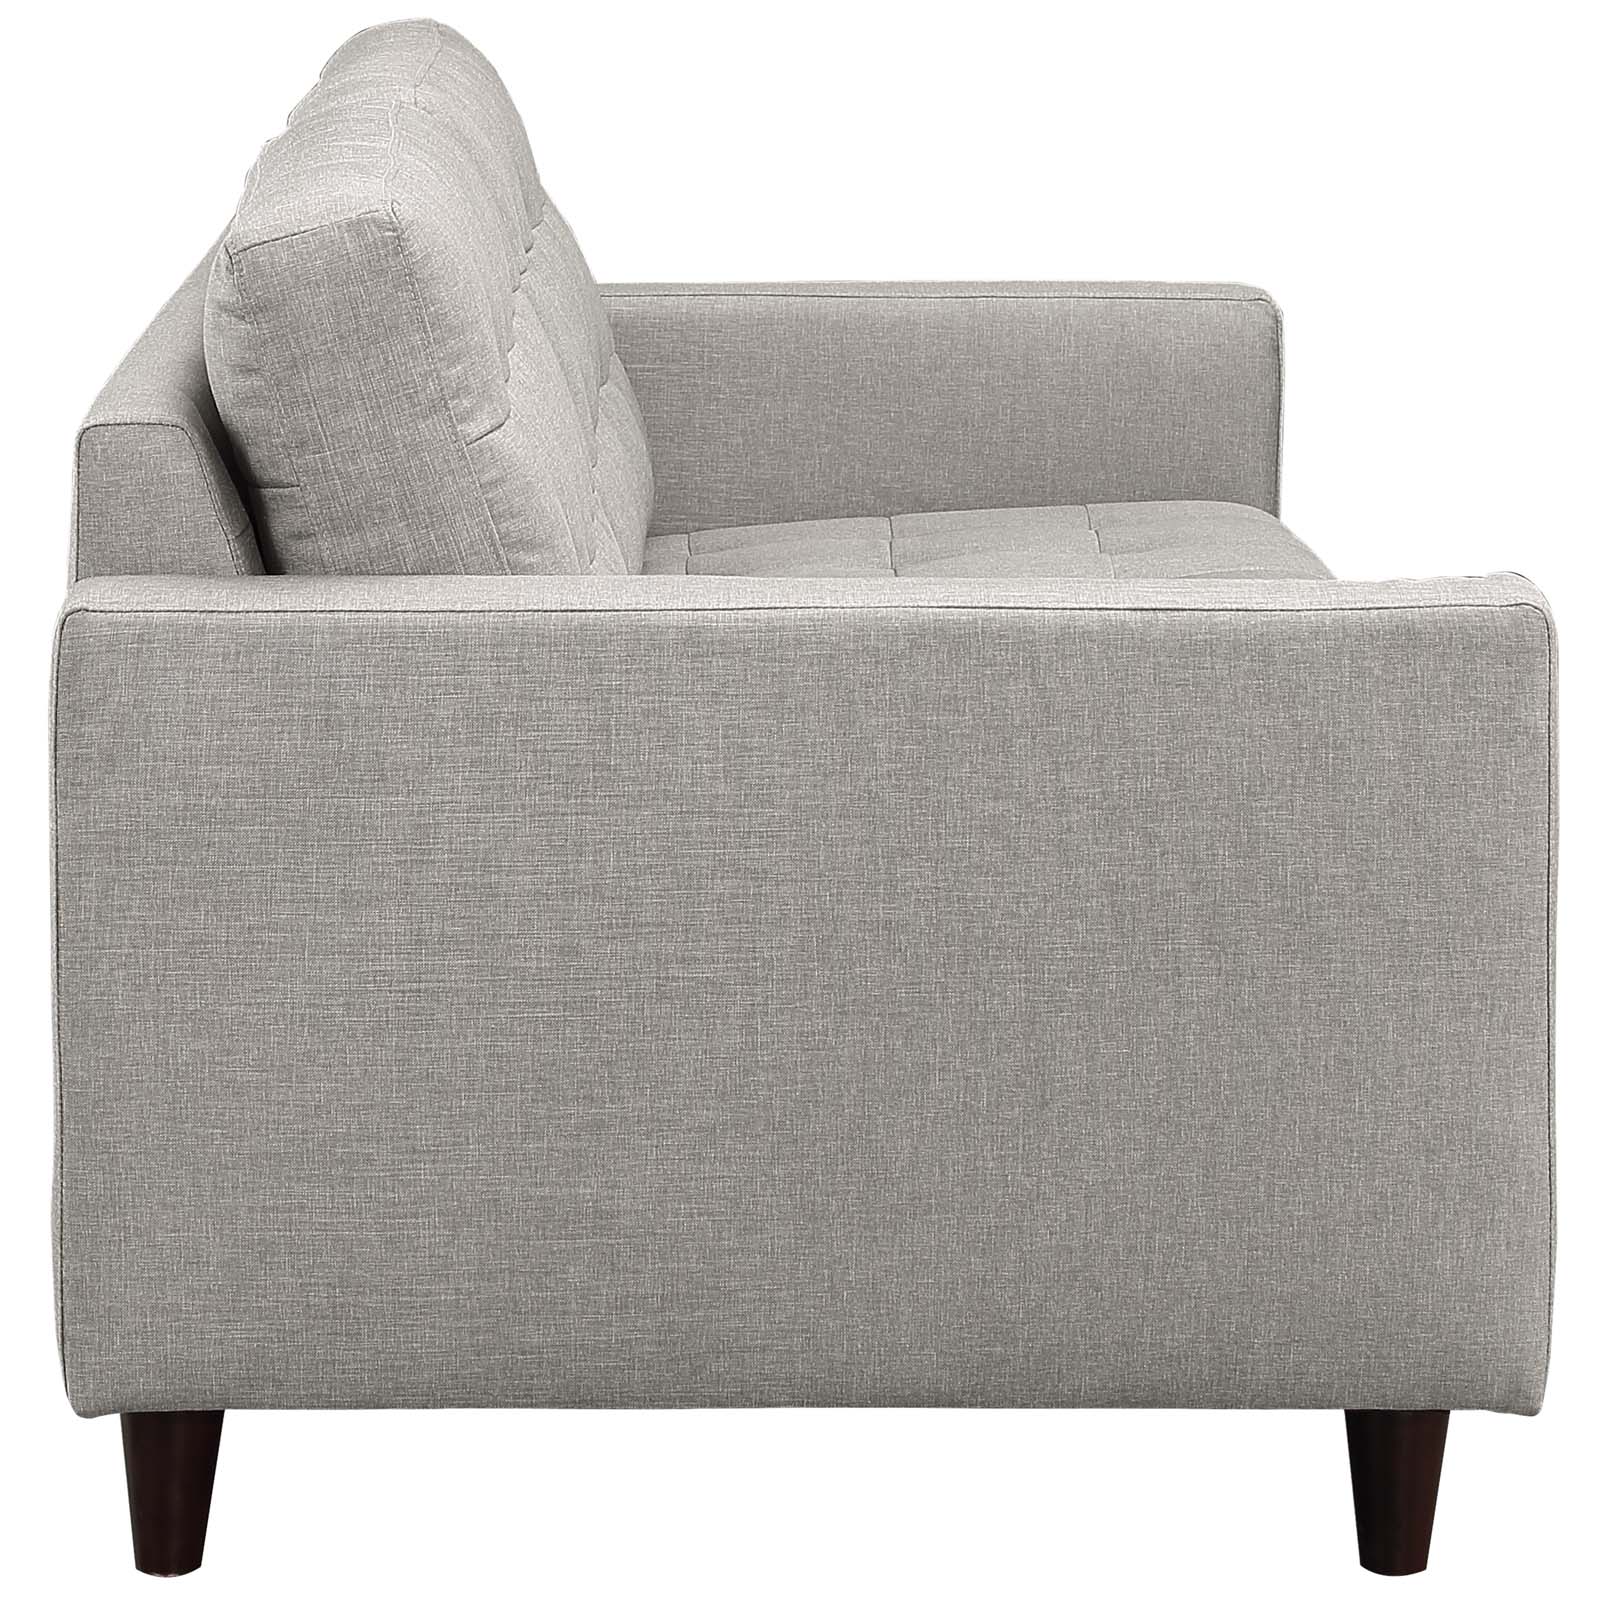 Empress Upholstered Fabric Sofa - East Shore Modern Home Furnishings